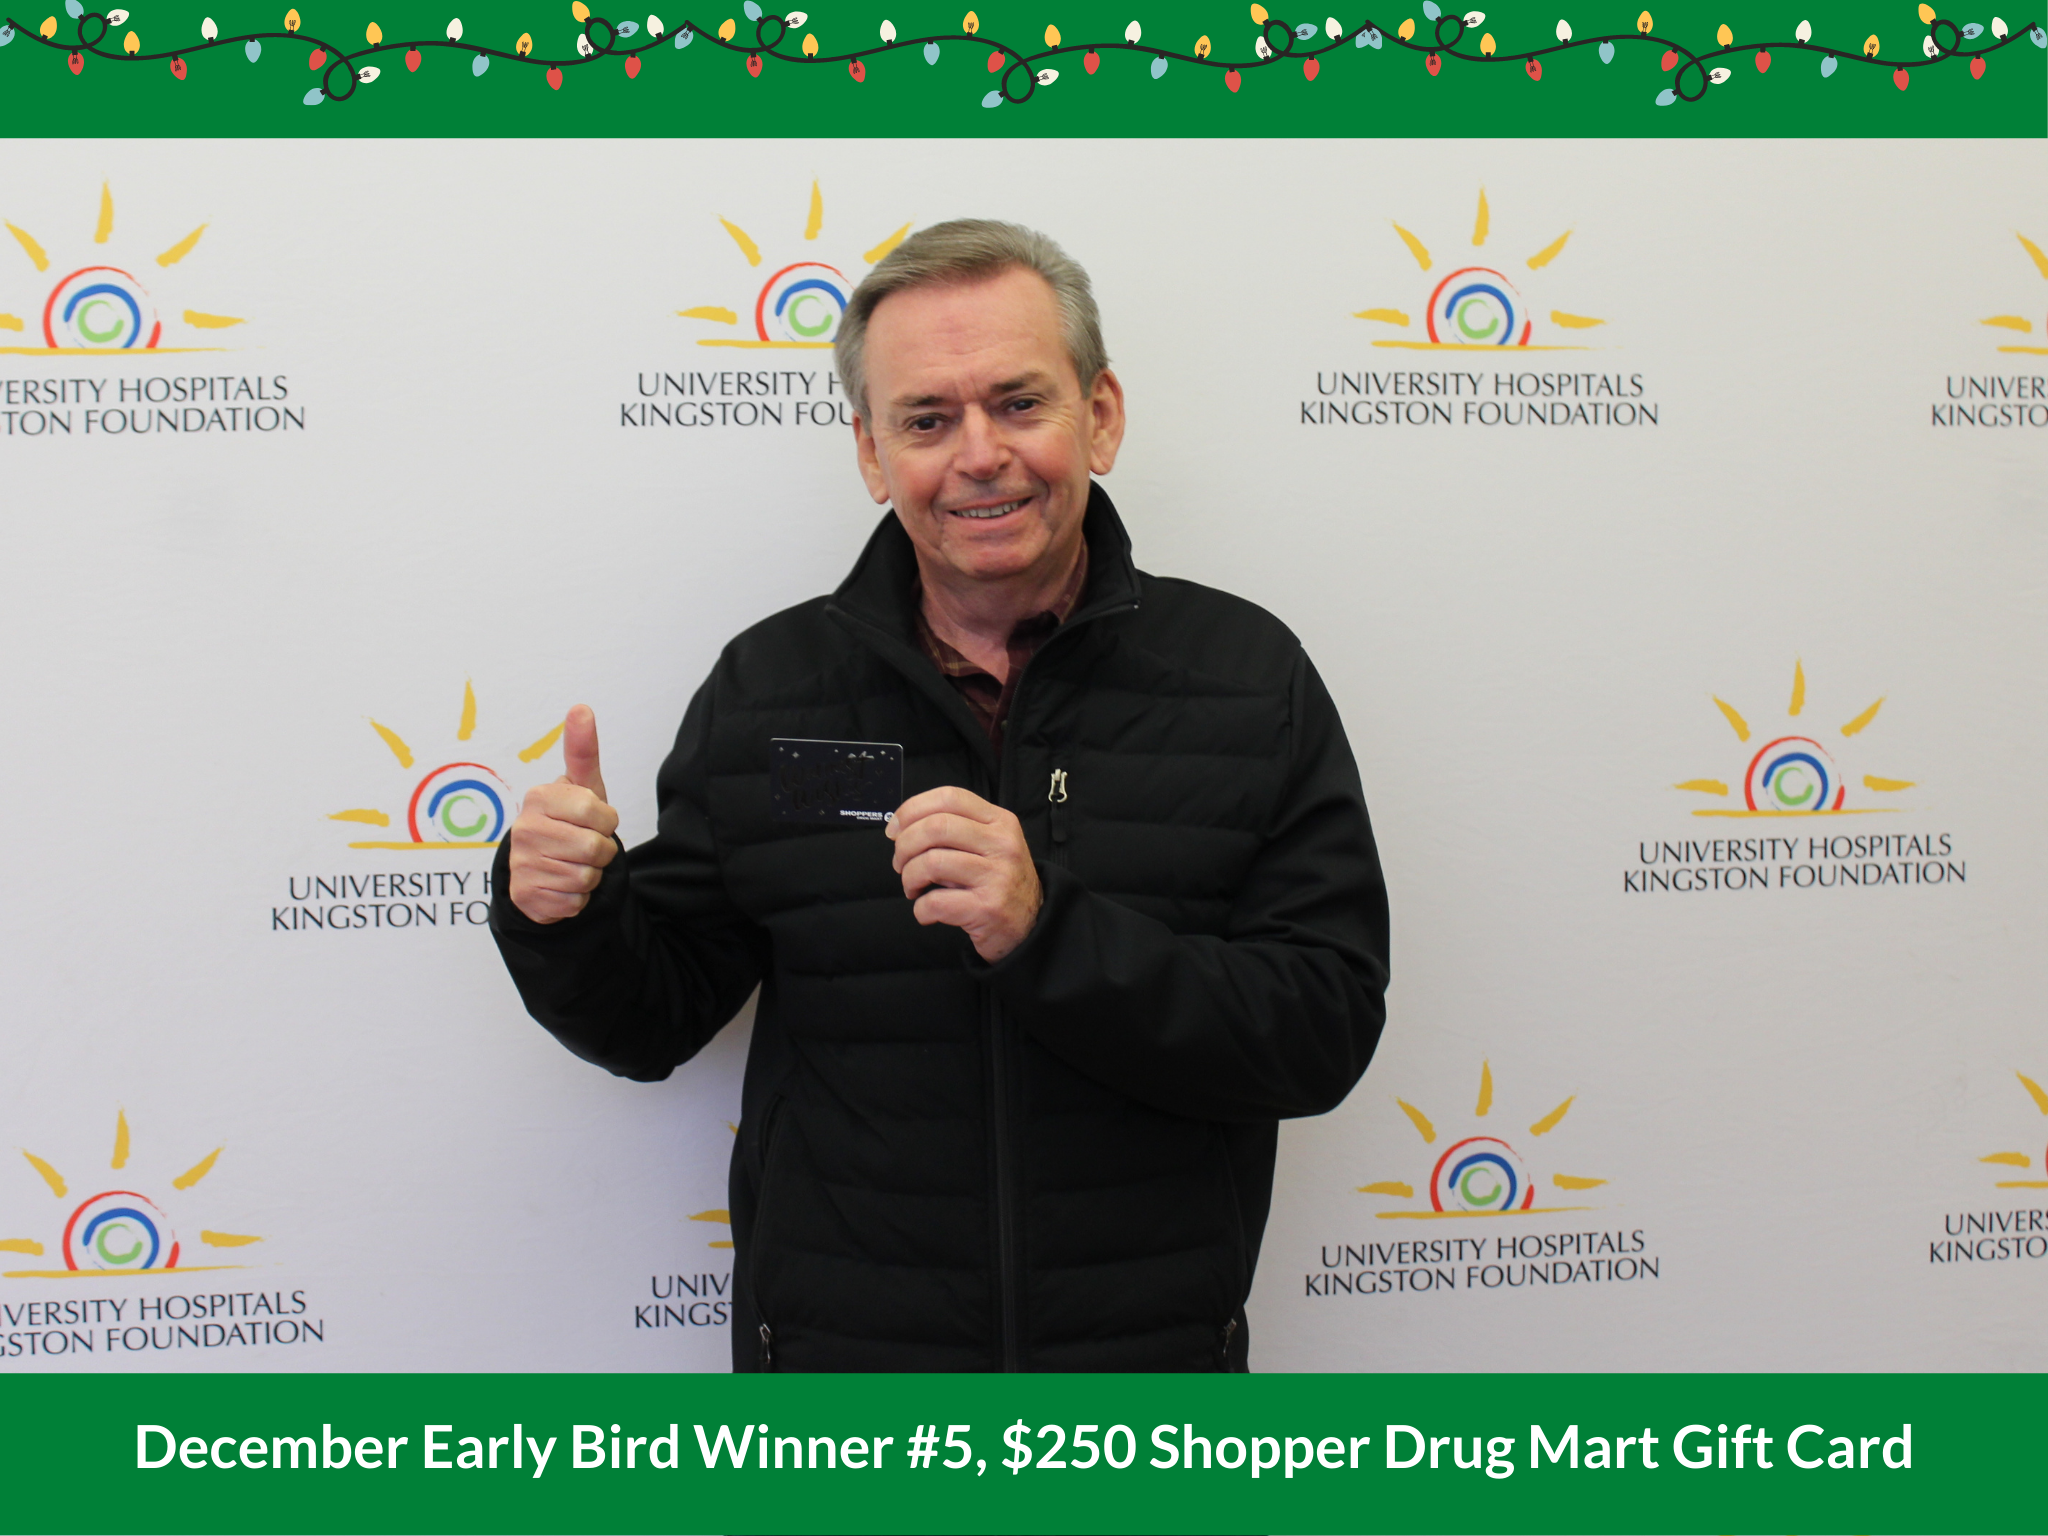 December Early Bird Winner #5